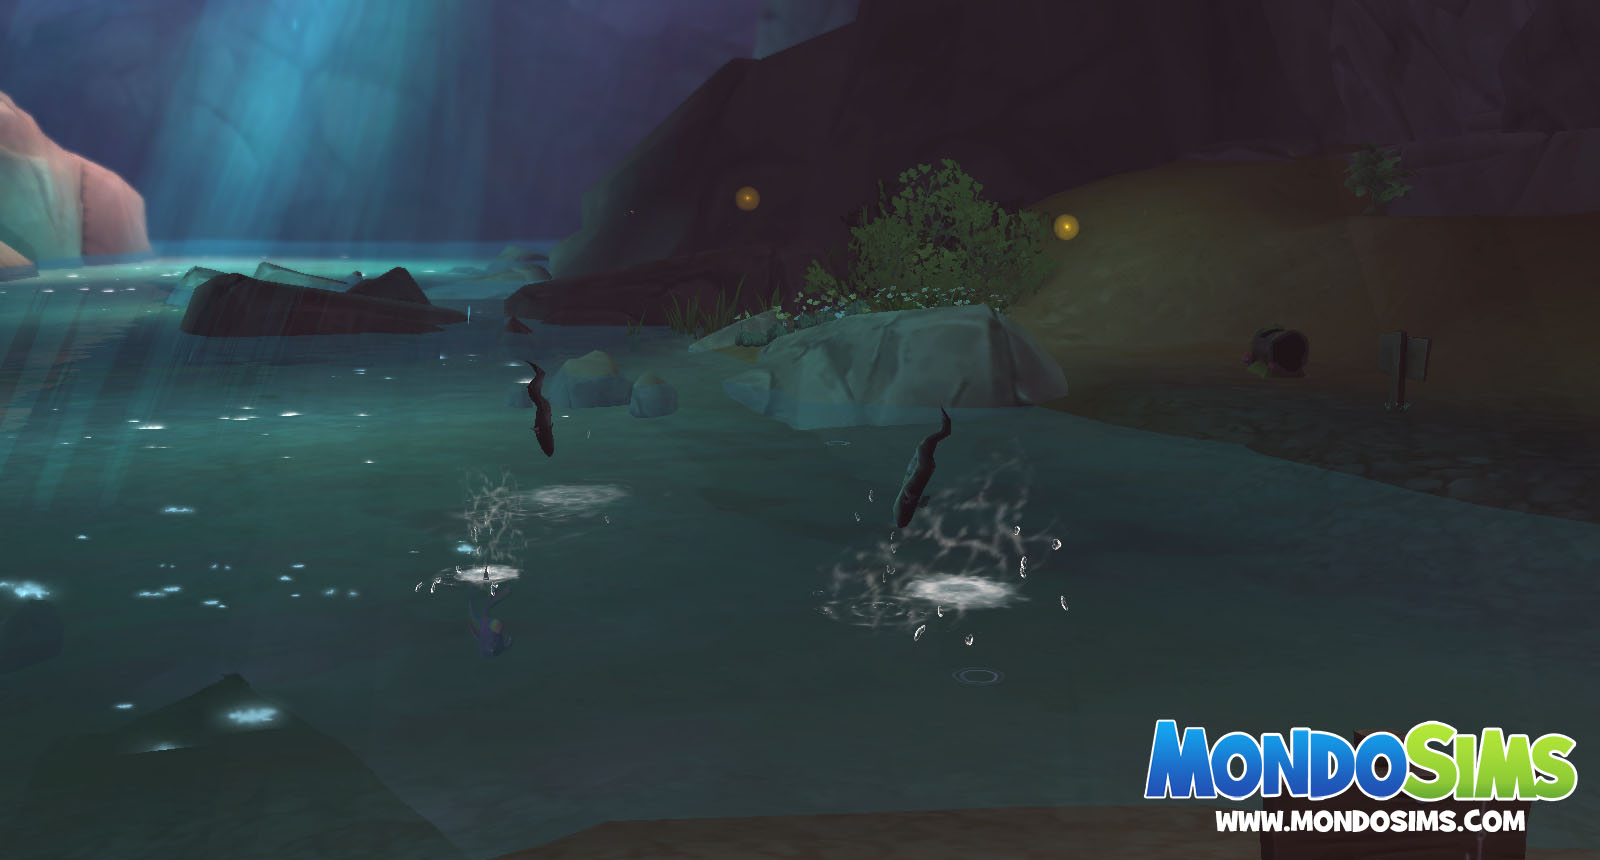 The Sims 4 grotta dimenticata